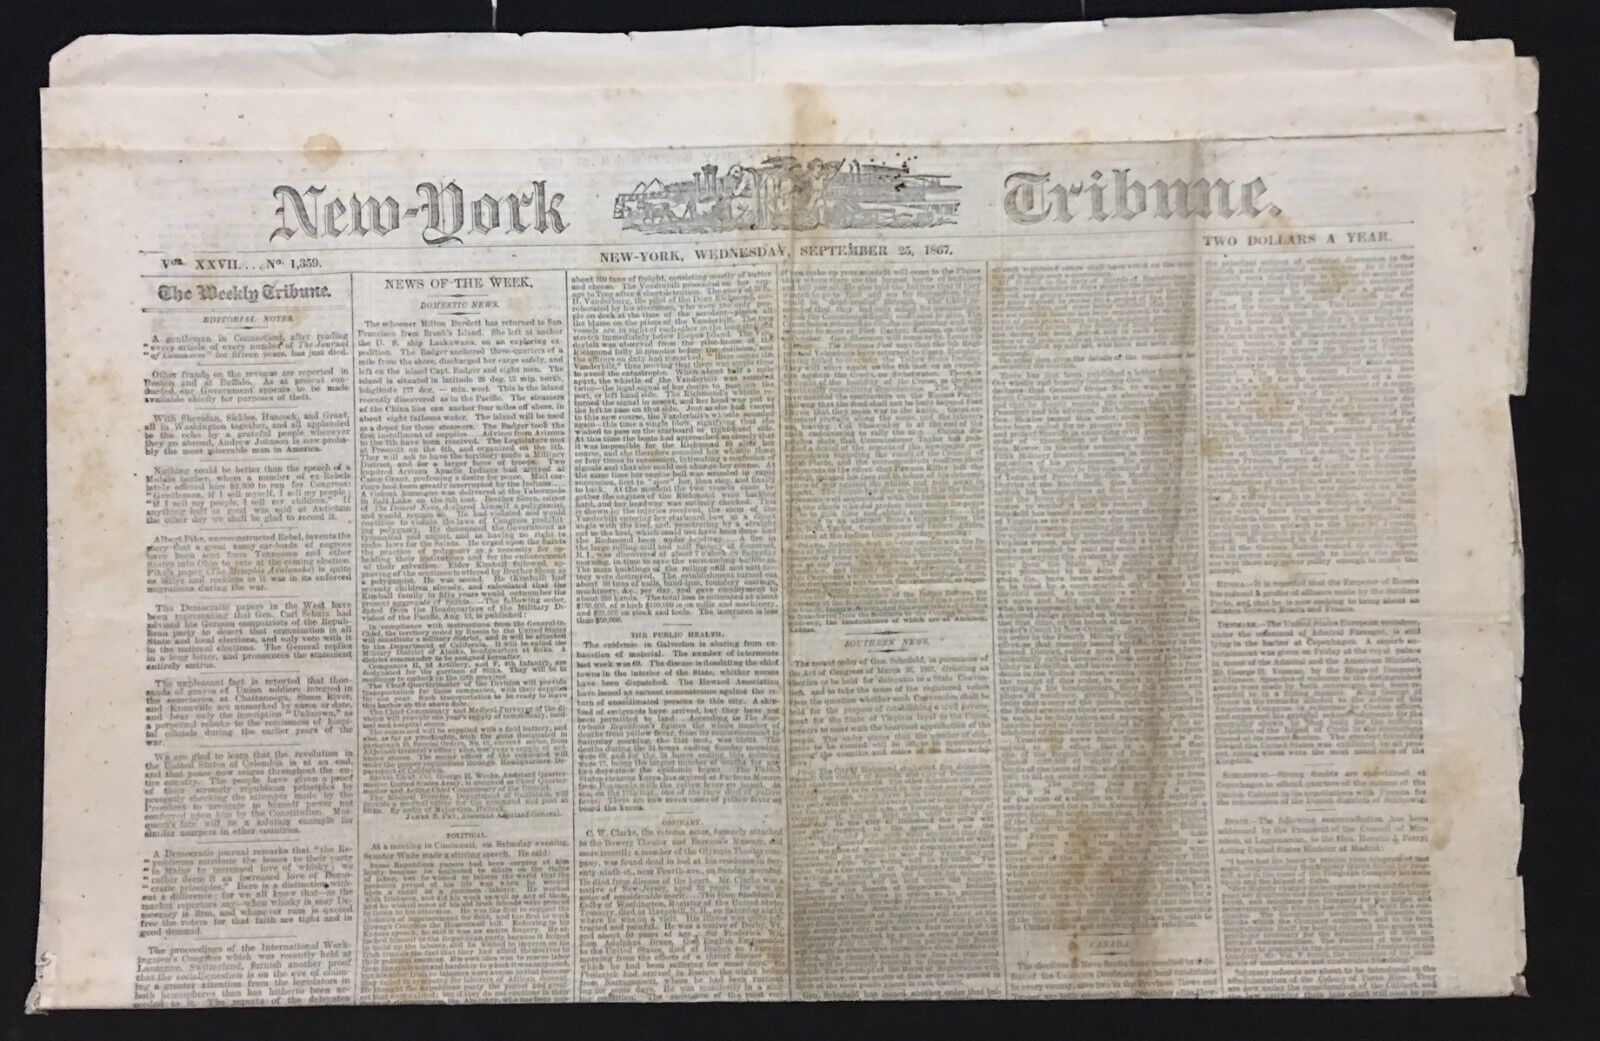 NEW YORK TRIBUNE: SEPTEMBER 25 1867  VINTAGE NEWSPAPER POST CIVIL WAR ERA